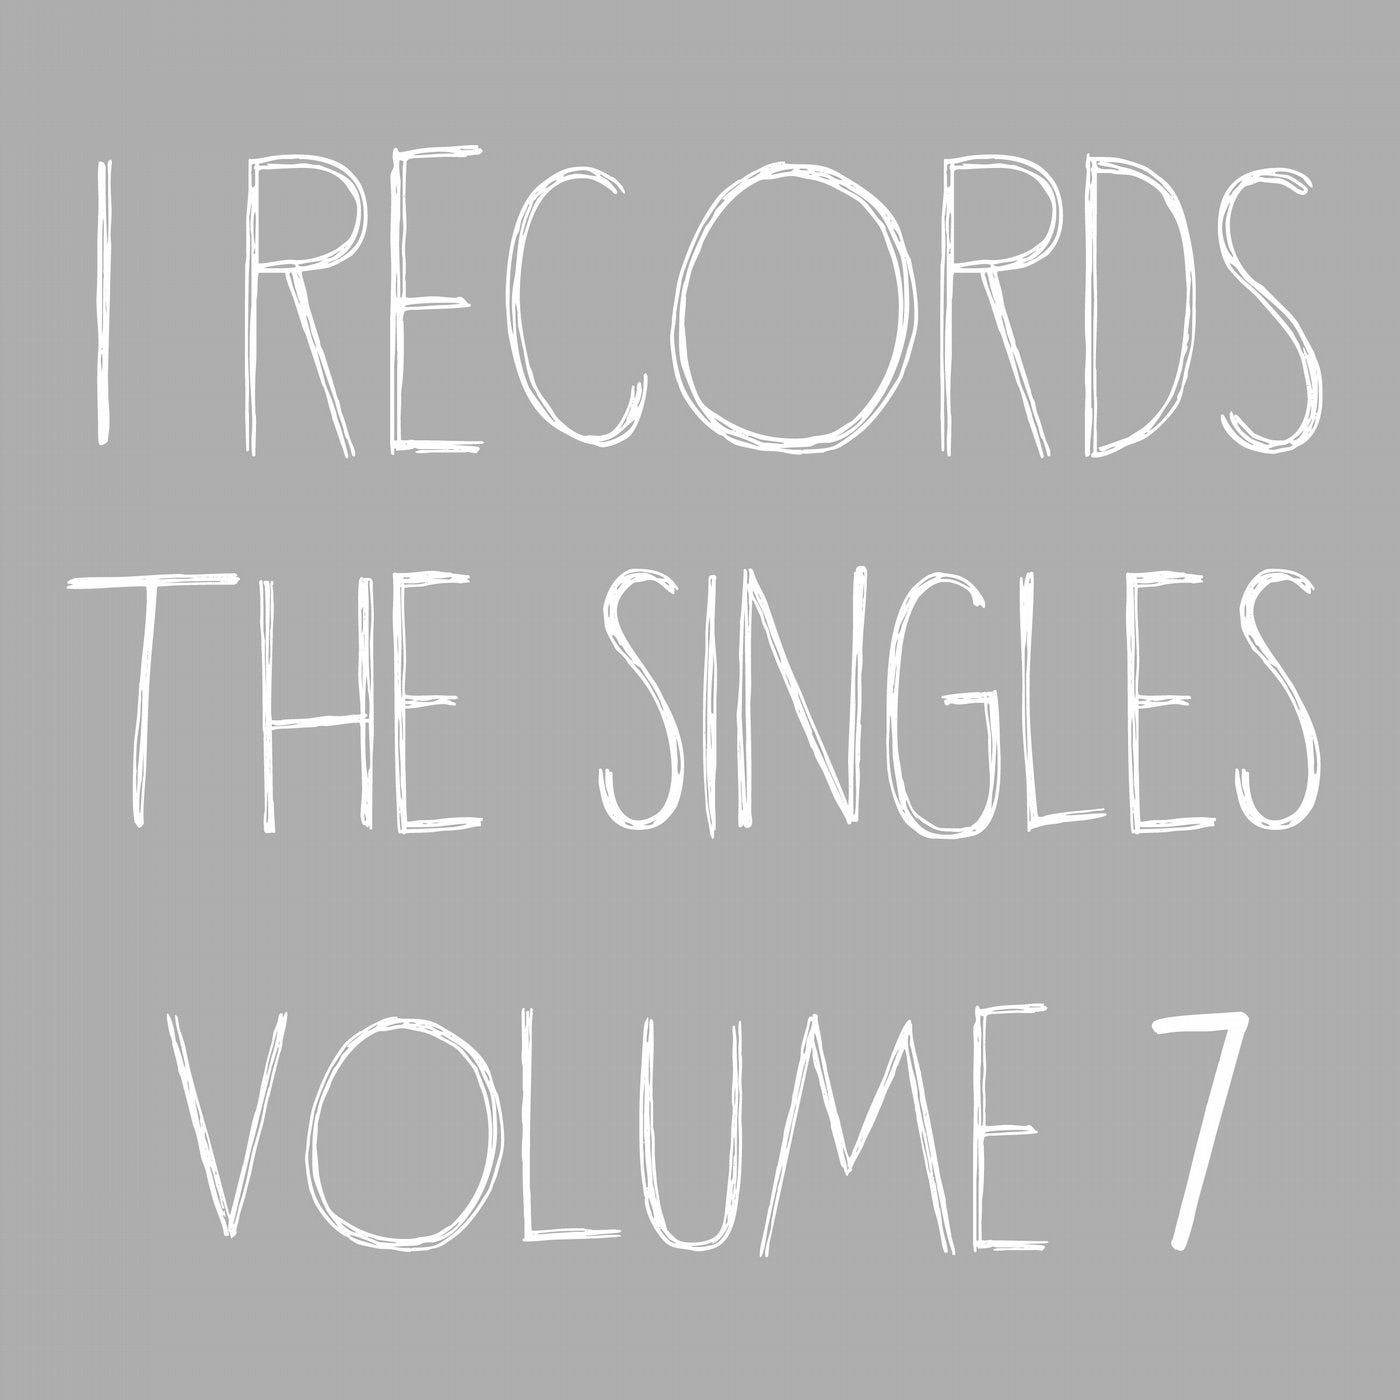 I Records The Singles Volume 7